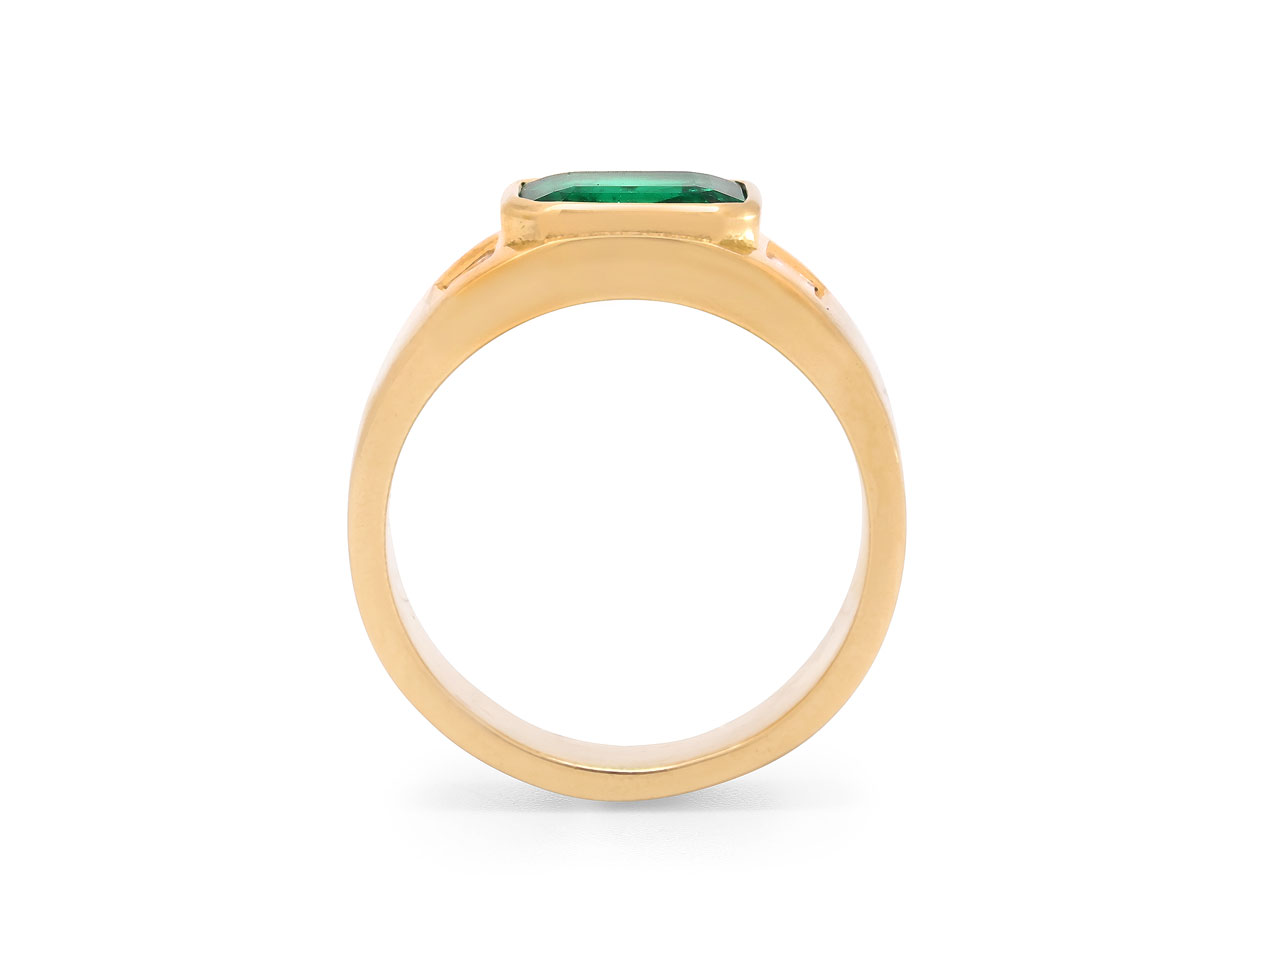 Beladora 'Bespoke' Colombian Emerald and Diamond Gypsy-Set Ring in 18K Gold